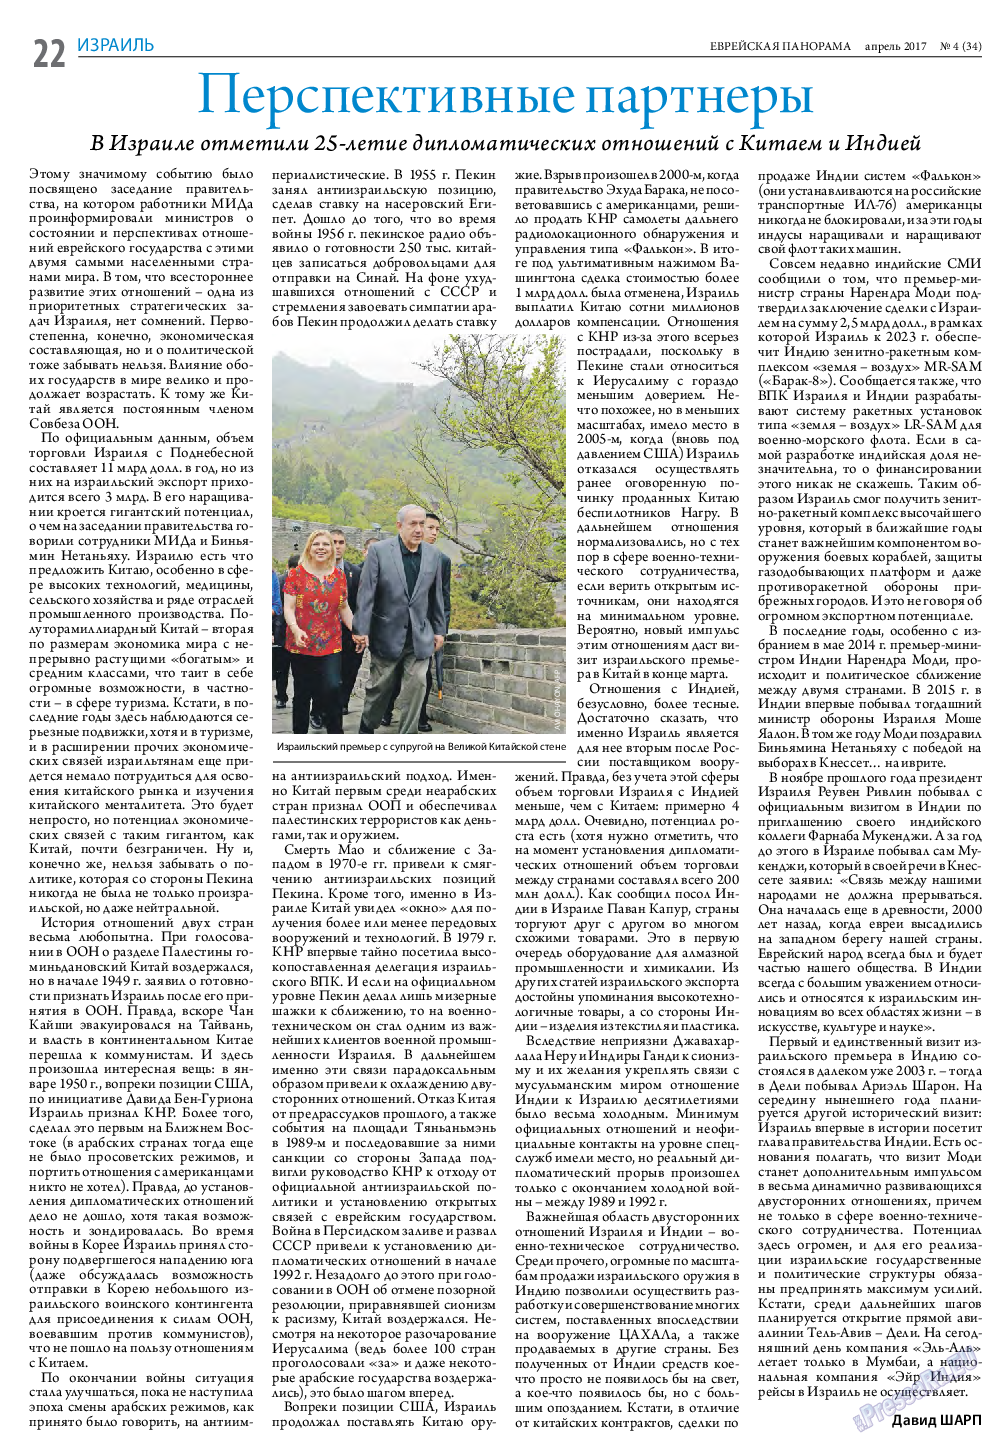 Еврейская панорама, газета. 2017 №4 стр.22